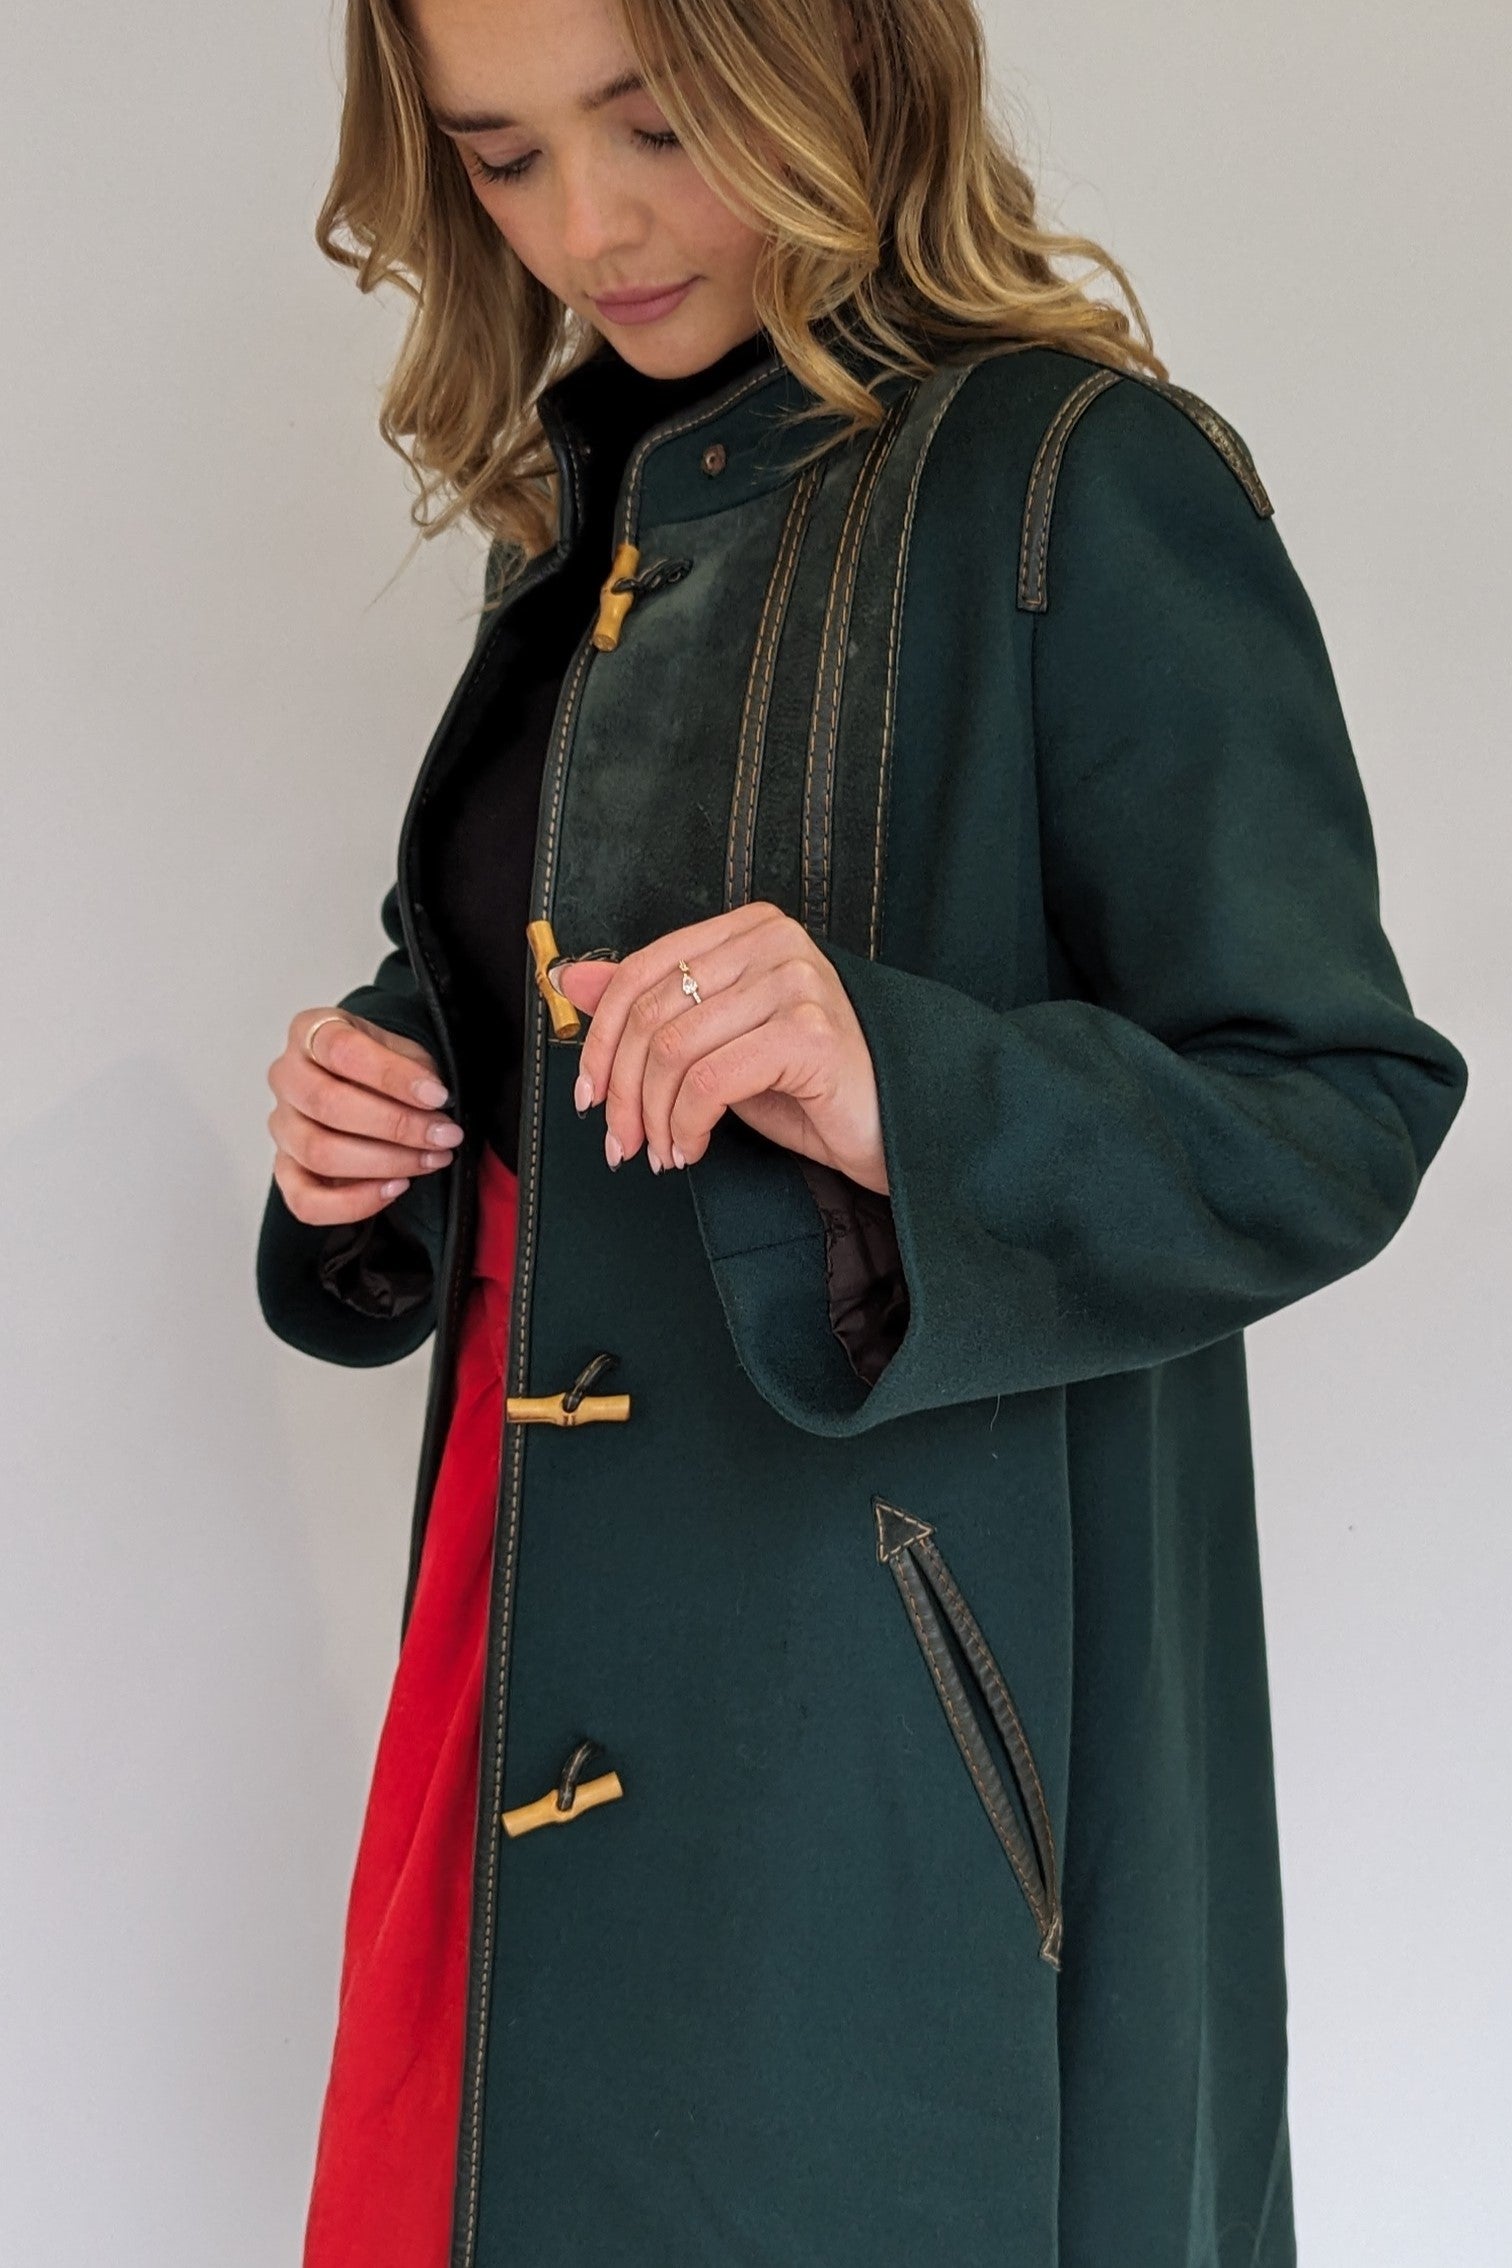 Flared sleeve on green wool coat